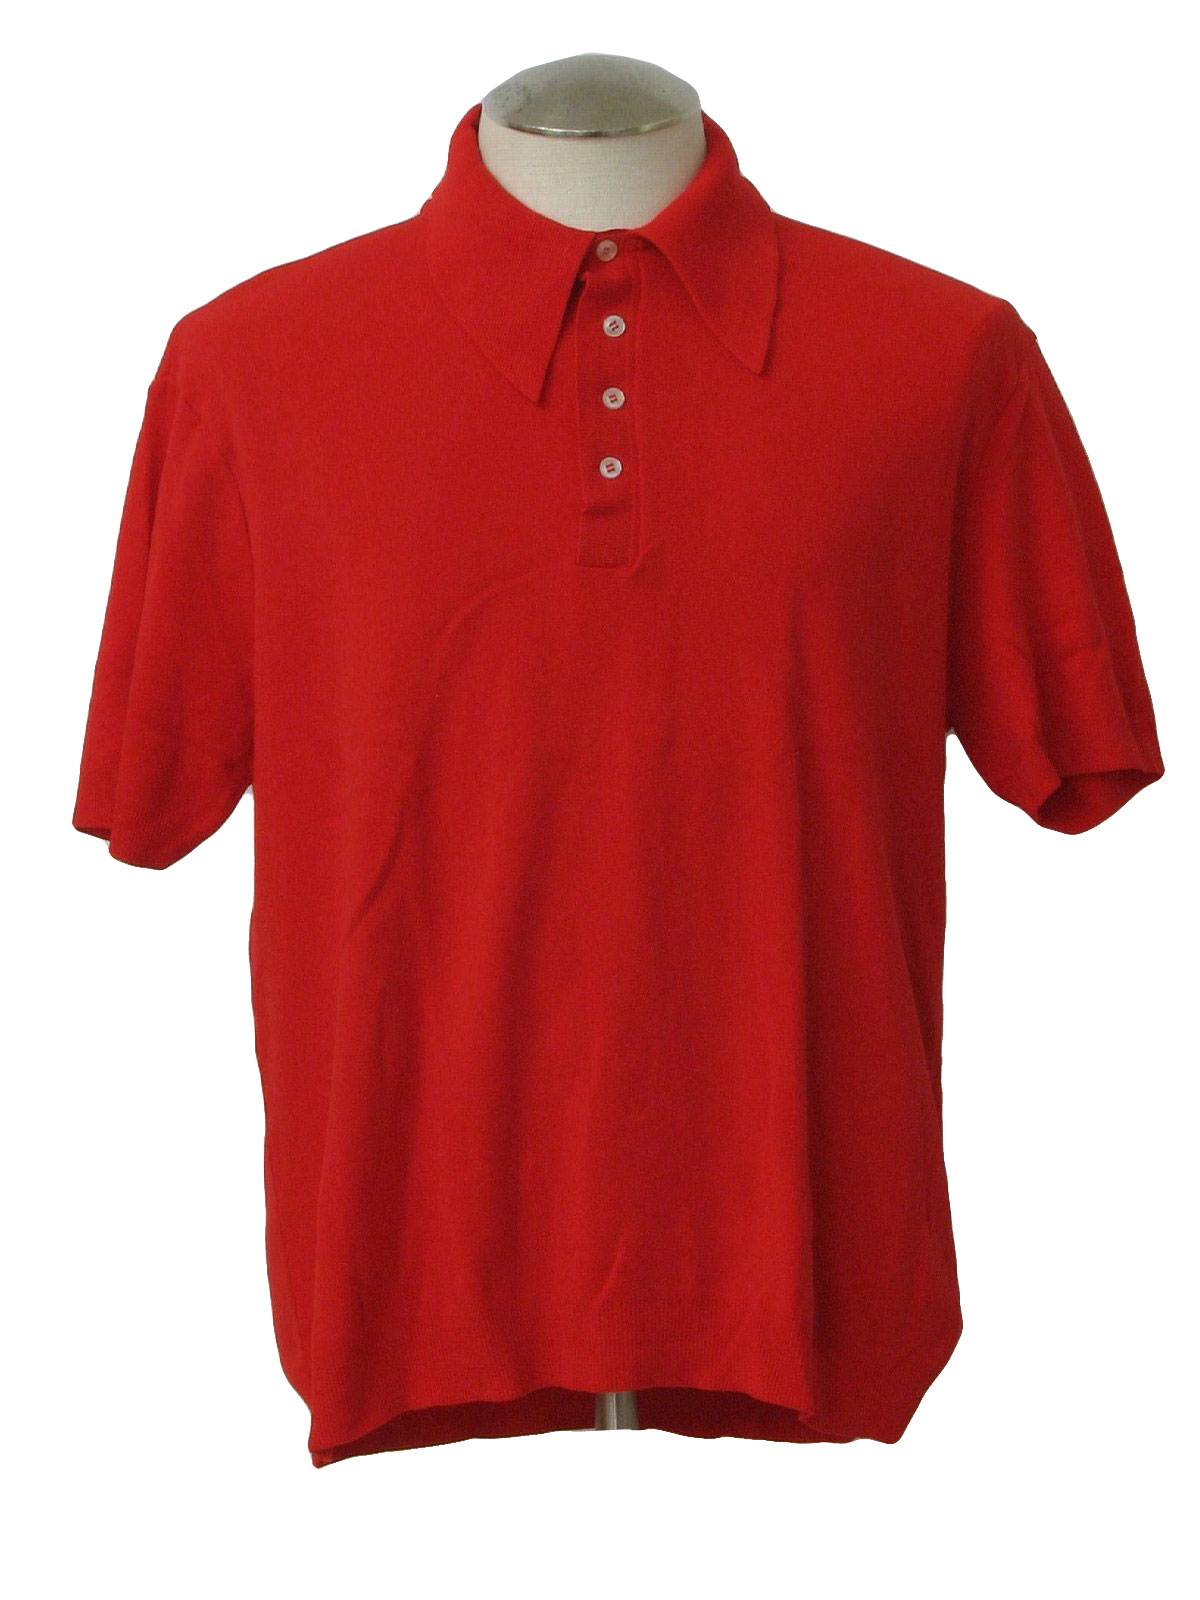 Retro 1970's Knit Shirt: 70s -no label- Mens red nylon banlon short ...